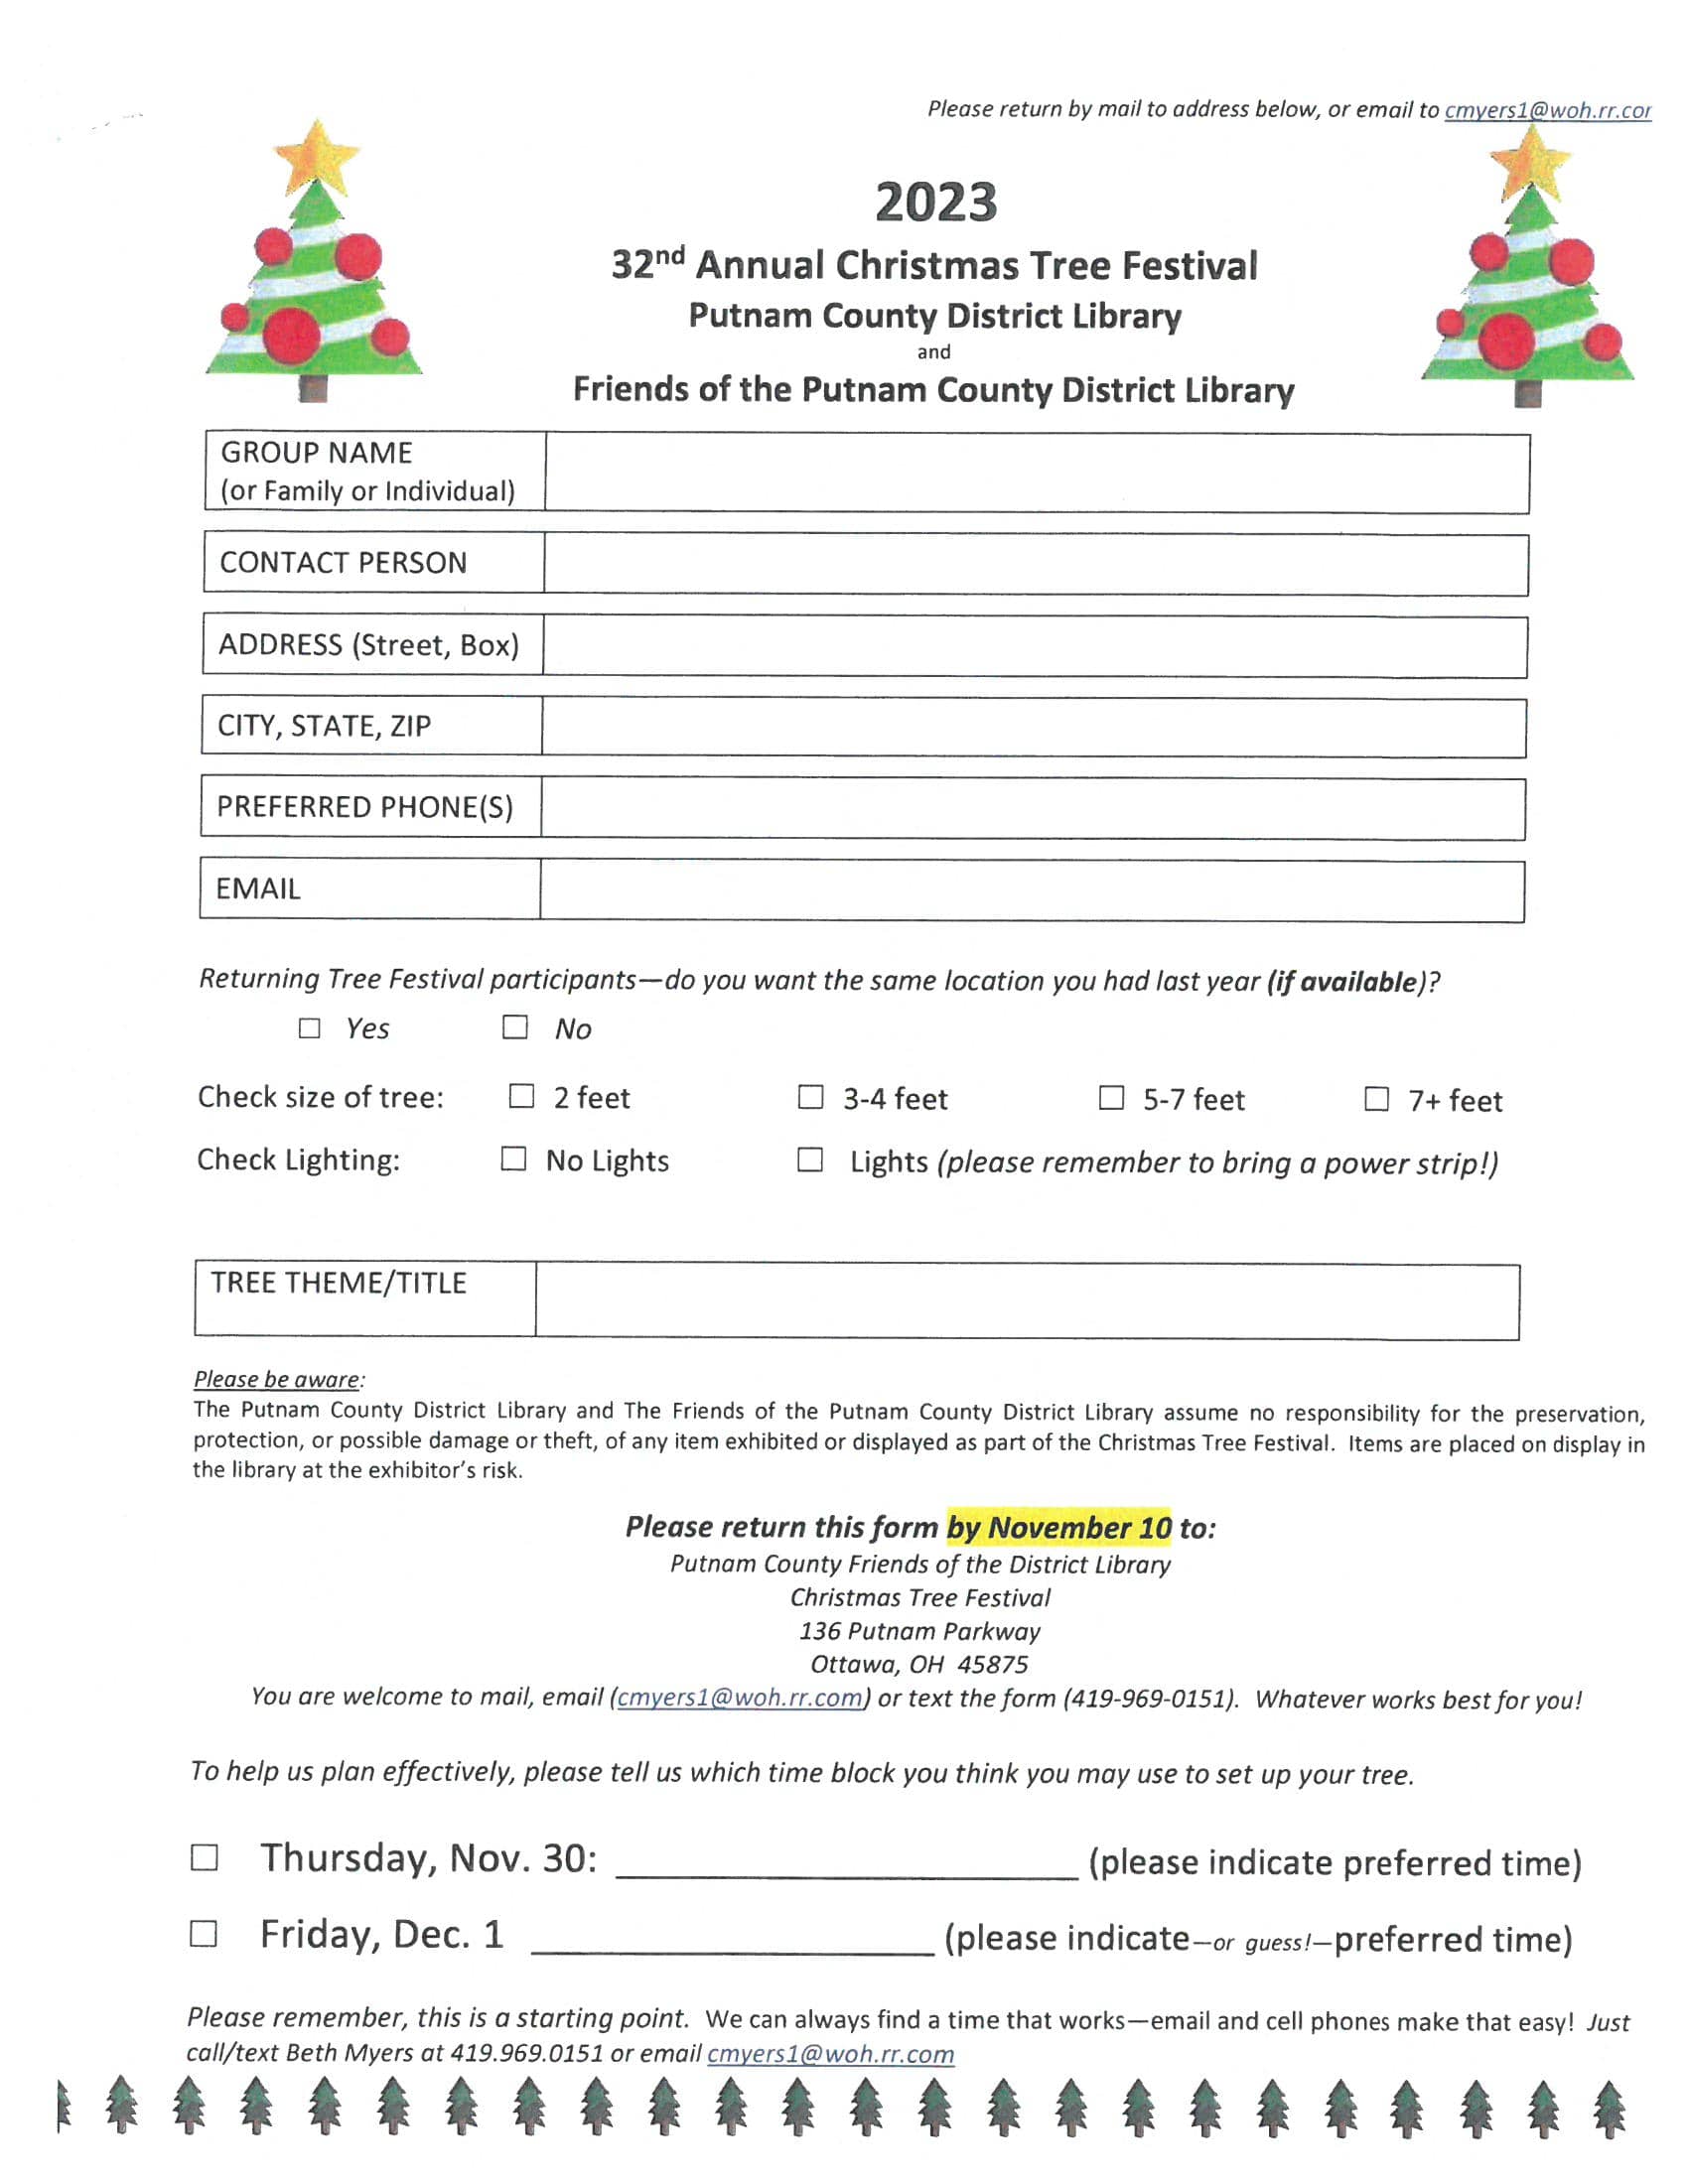 2023 Christmas Tree Festival Application